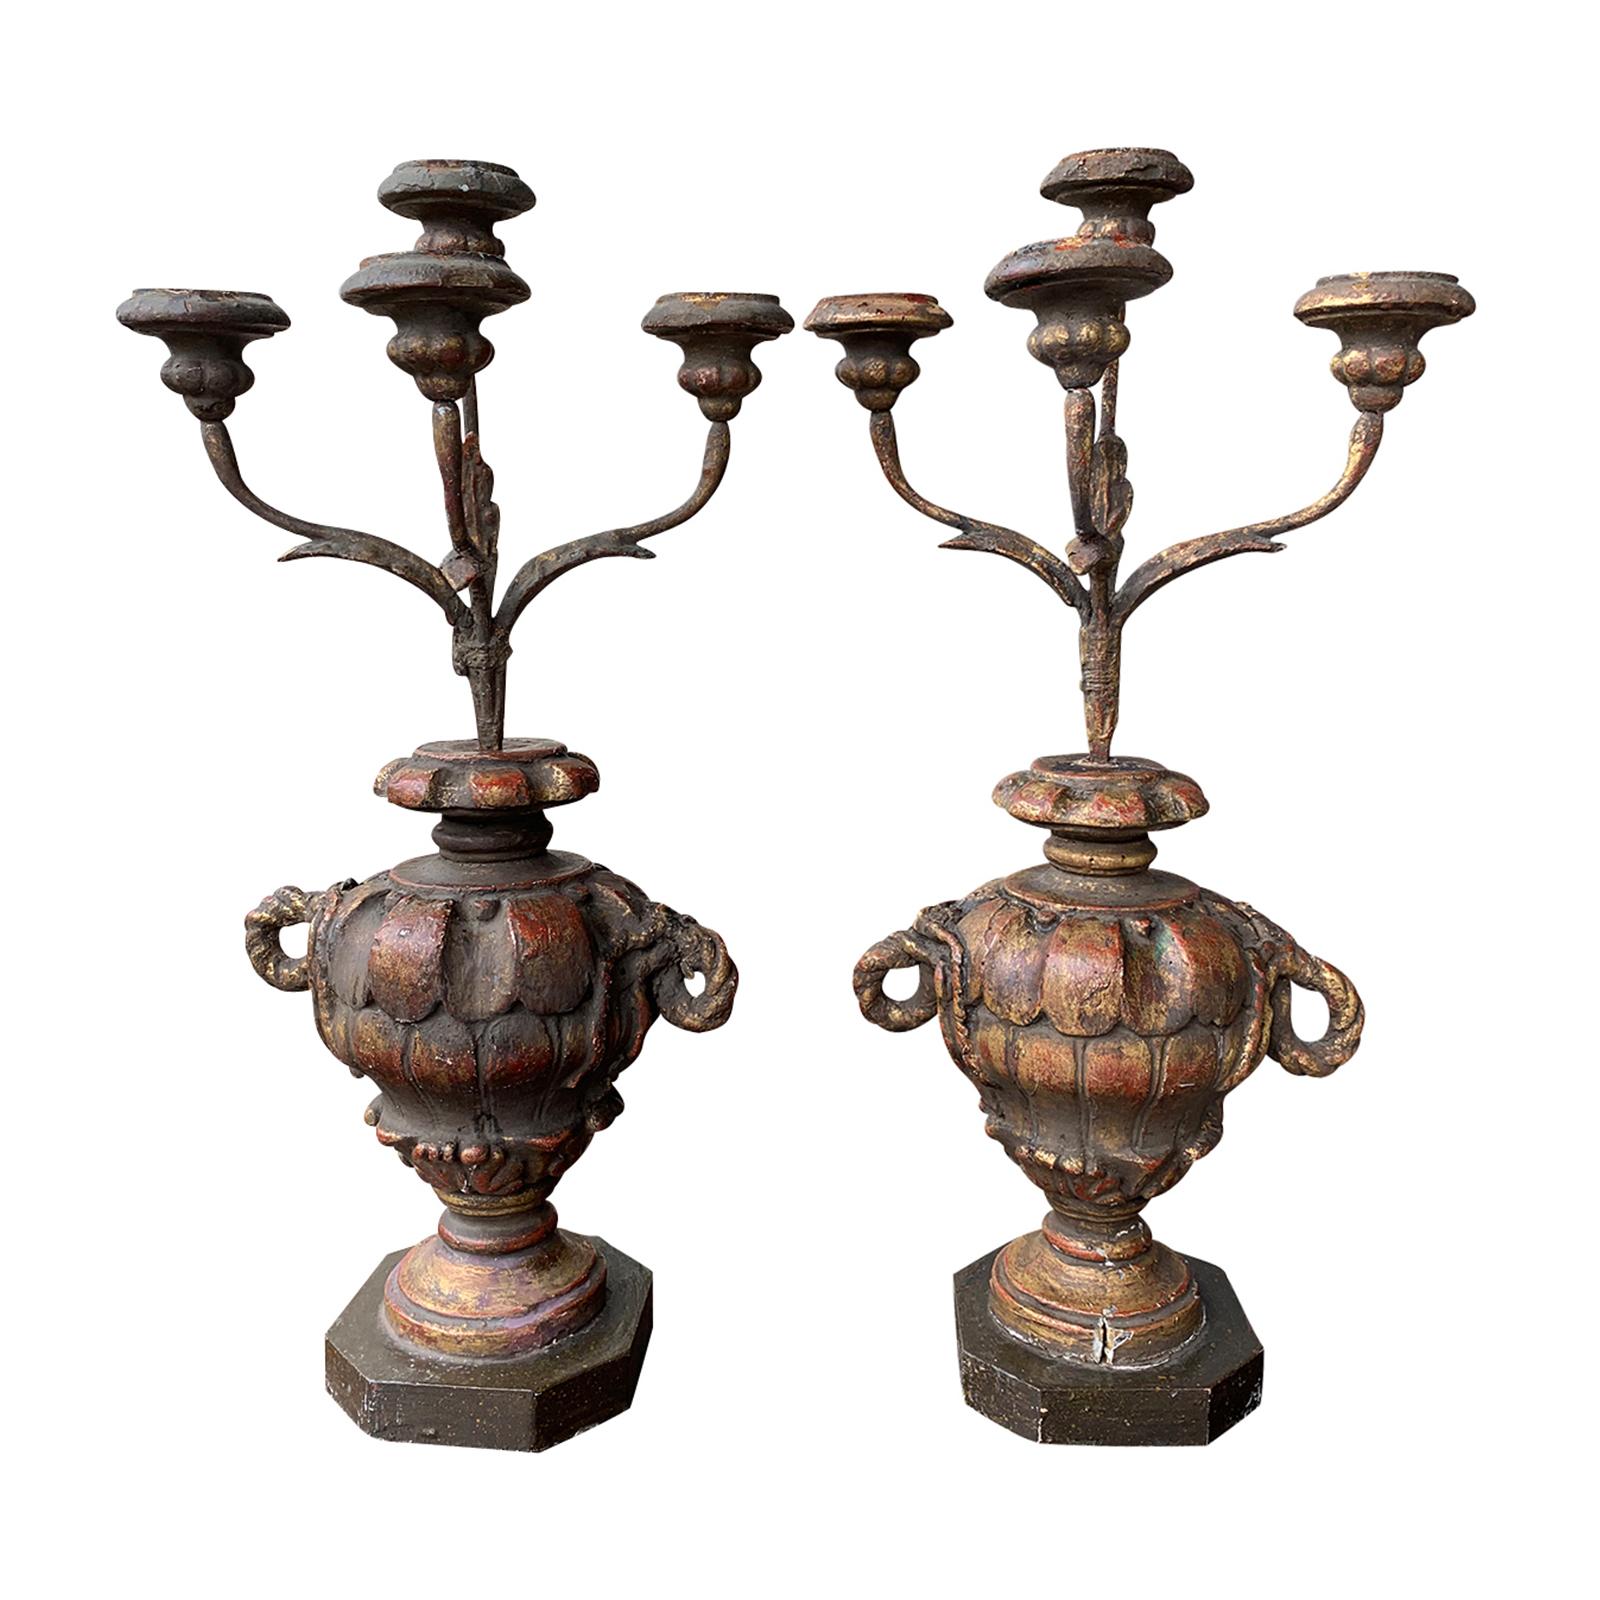 Pair of 18th-19th century Italian candelabras.